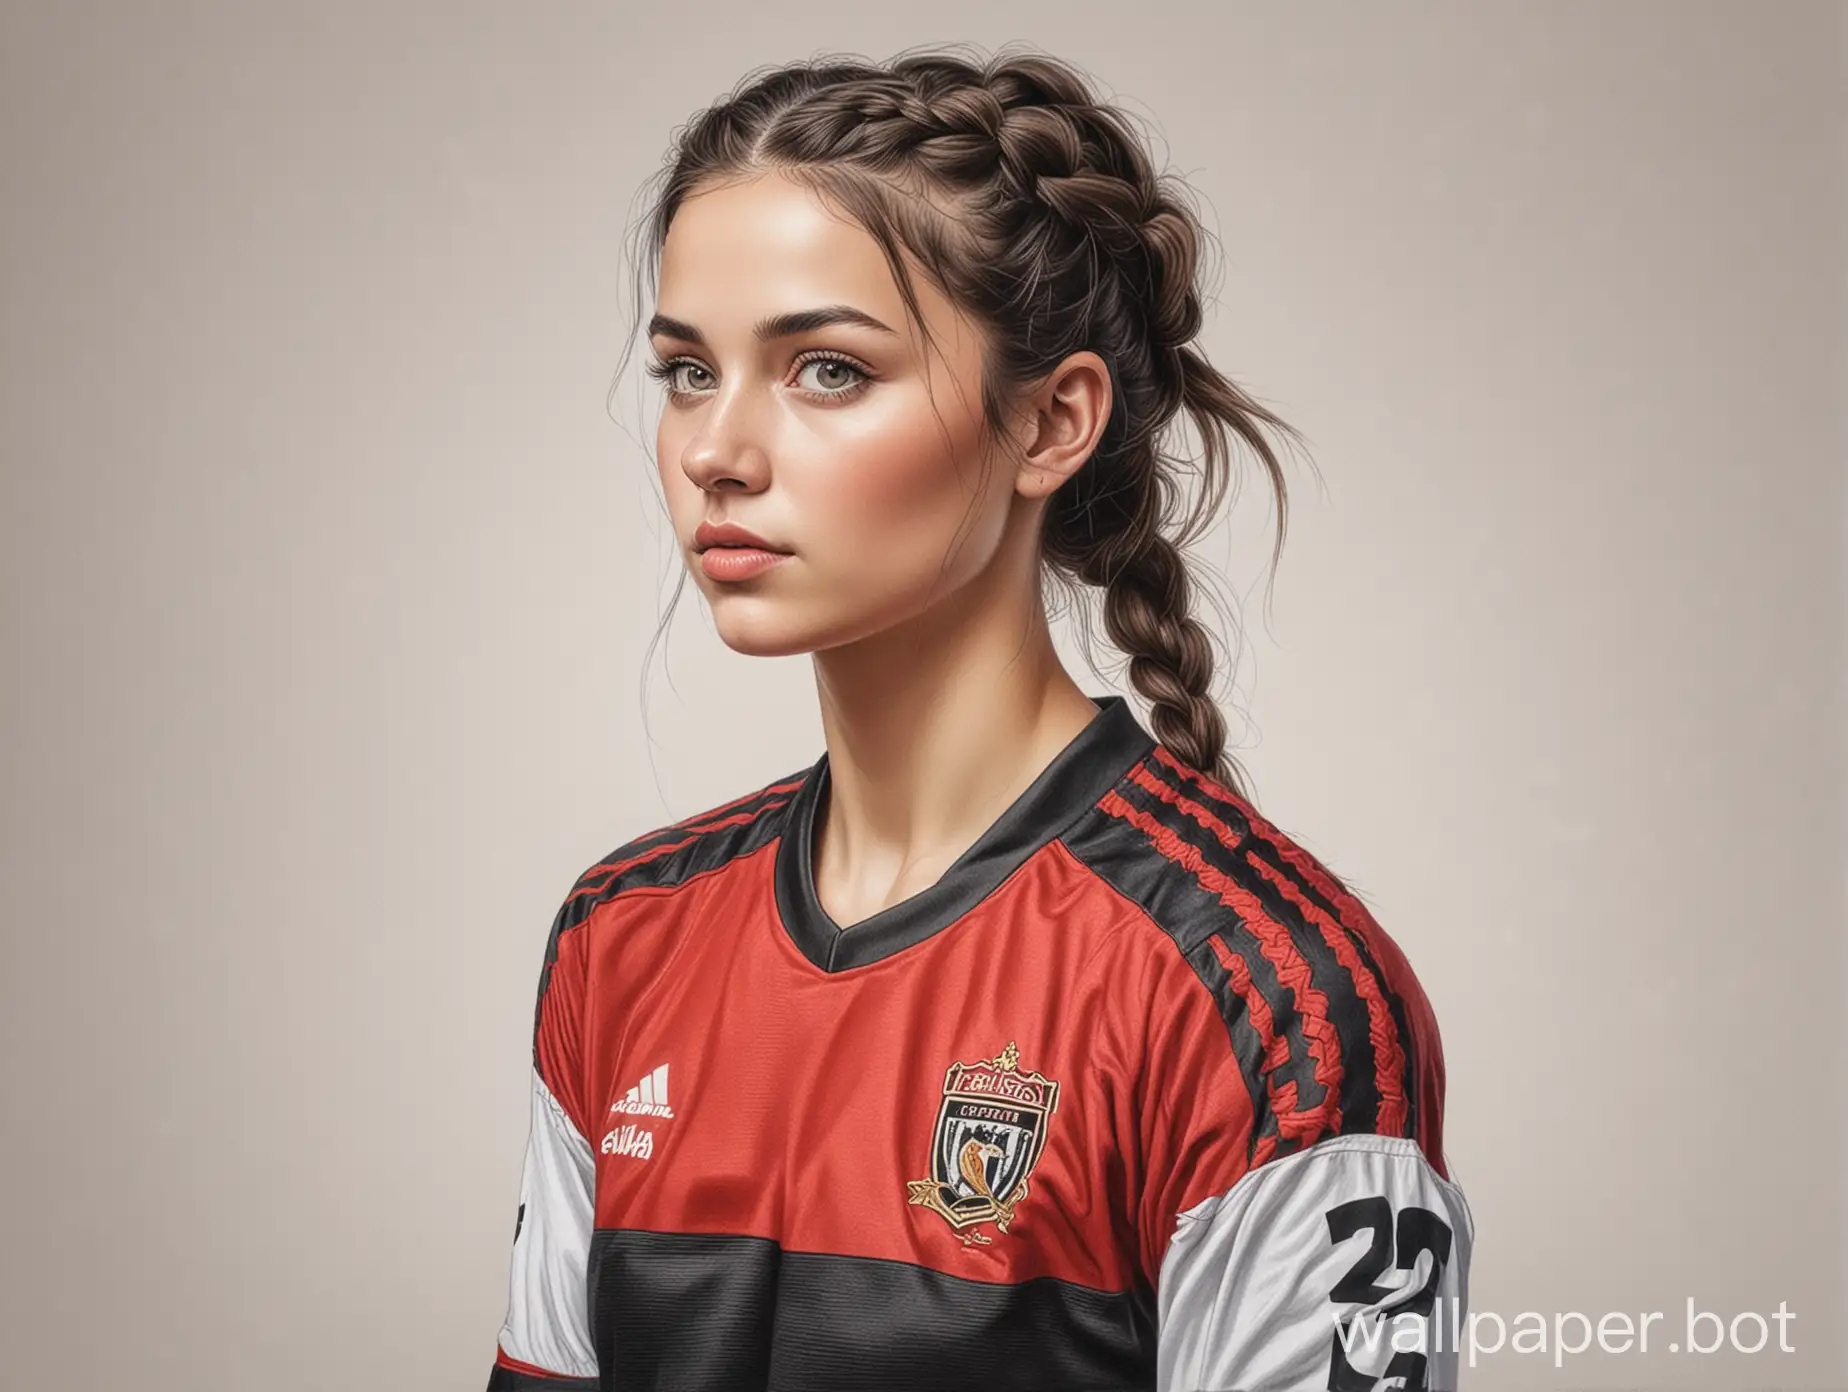 Realistic-Drawing-of-Anna-Komarova-in-RedBlack-Soccer-Uniform